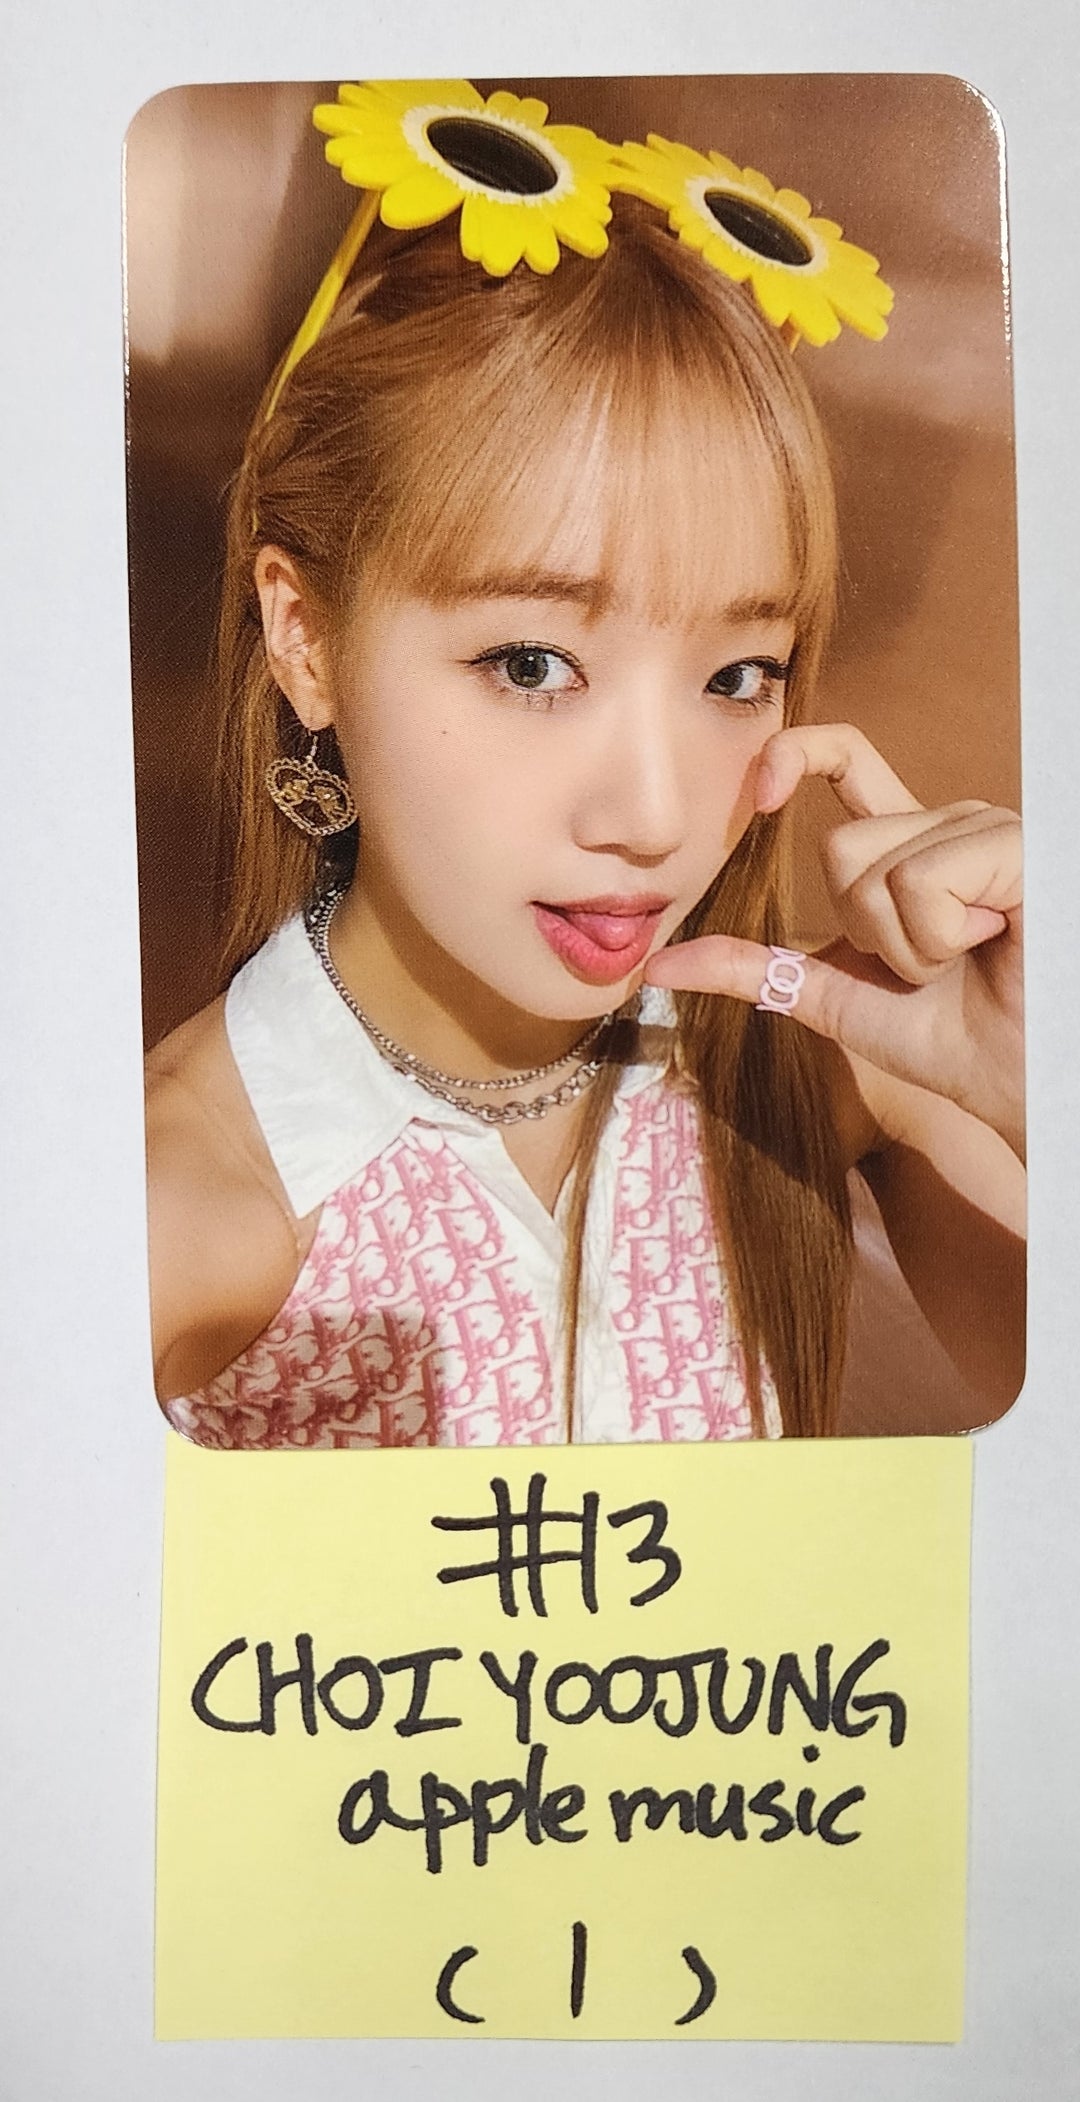 Choi Yoojung (of Weki Meki) - Apple Music Lucky Draw Event Photocard